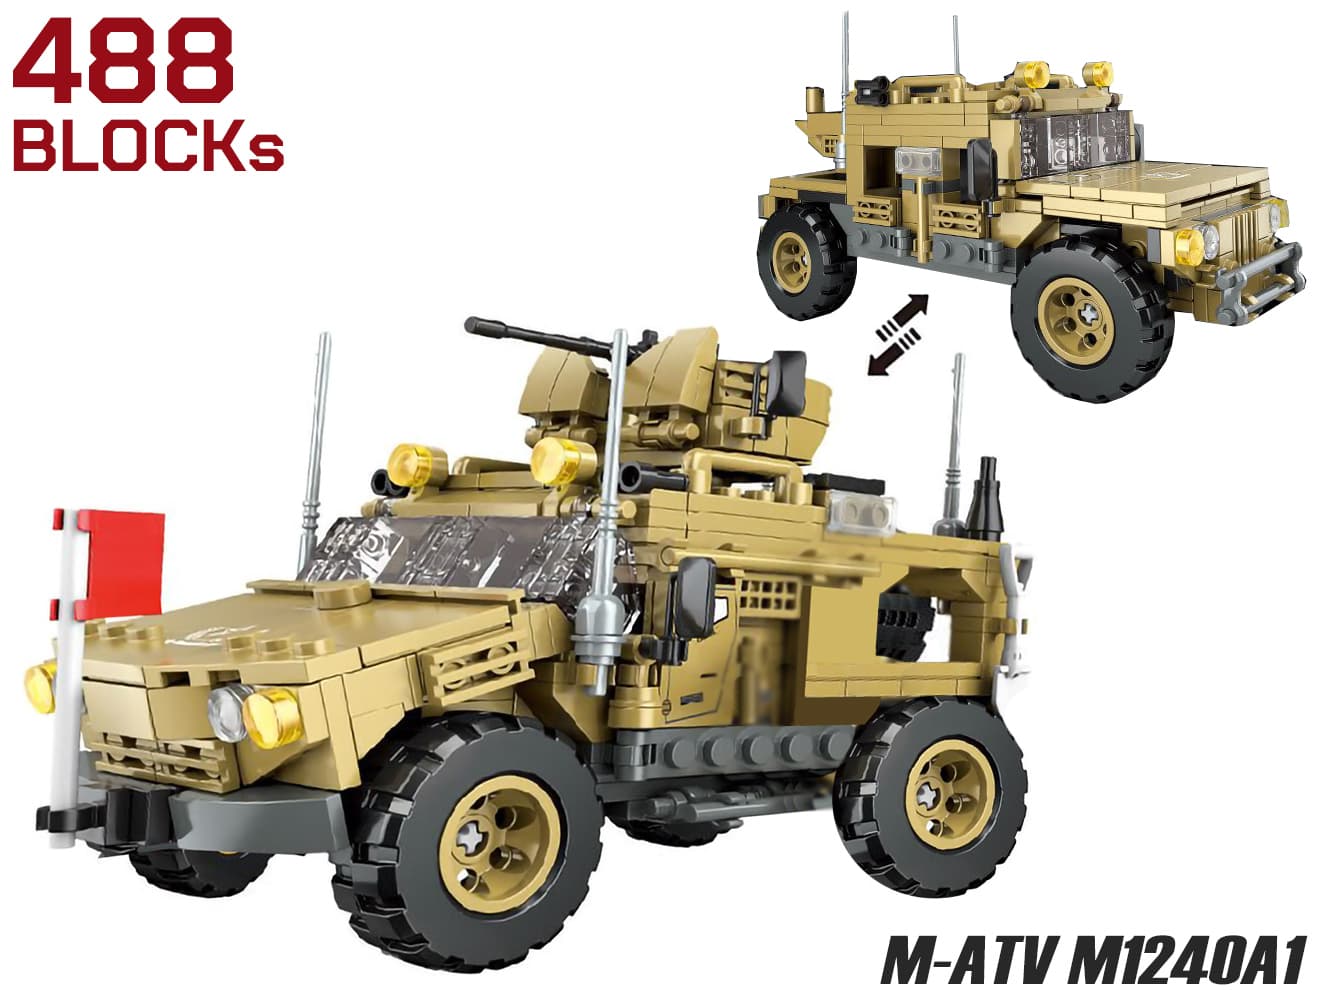 AFM M-ATV M1240A1 耐地雷/伏撃防護装甲車 488Blocks | ミリタリー 